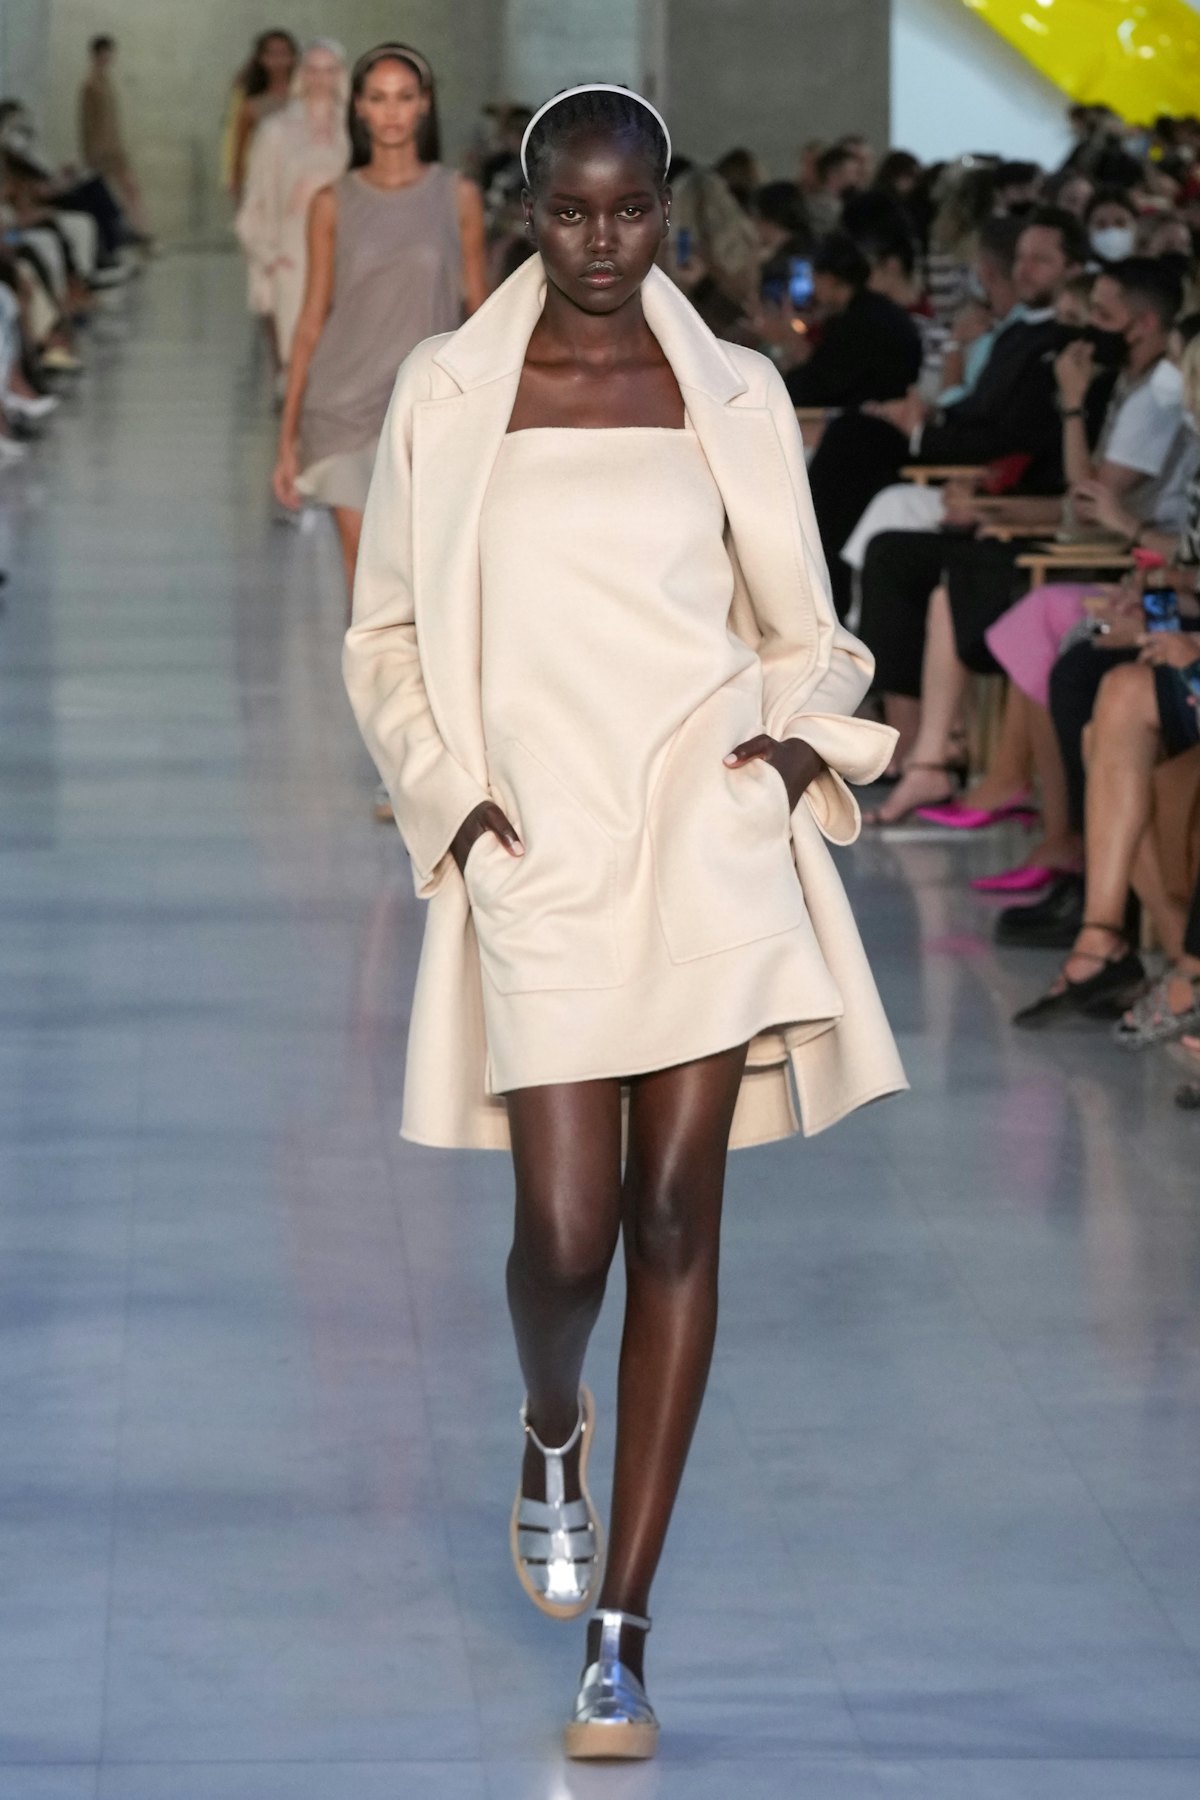 MILAN, ITALY - SEPTEMBER 23: Adut Akech walks the runway at the Max Mara fashion show during the Mil...